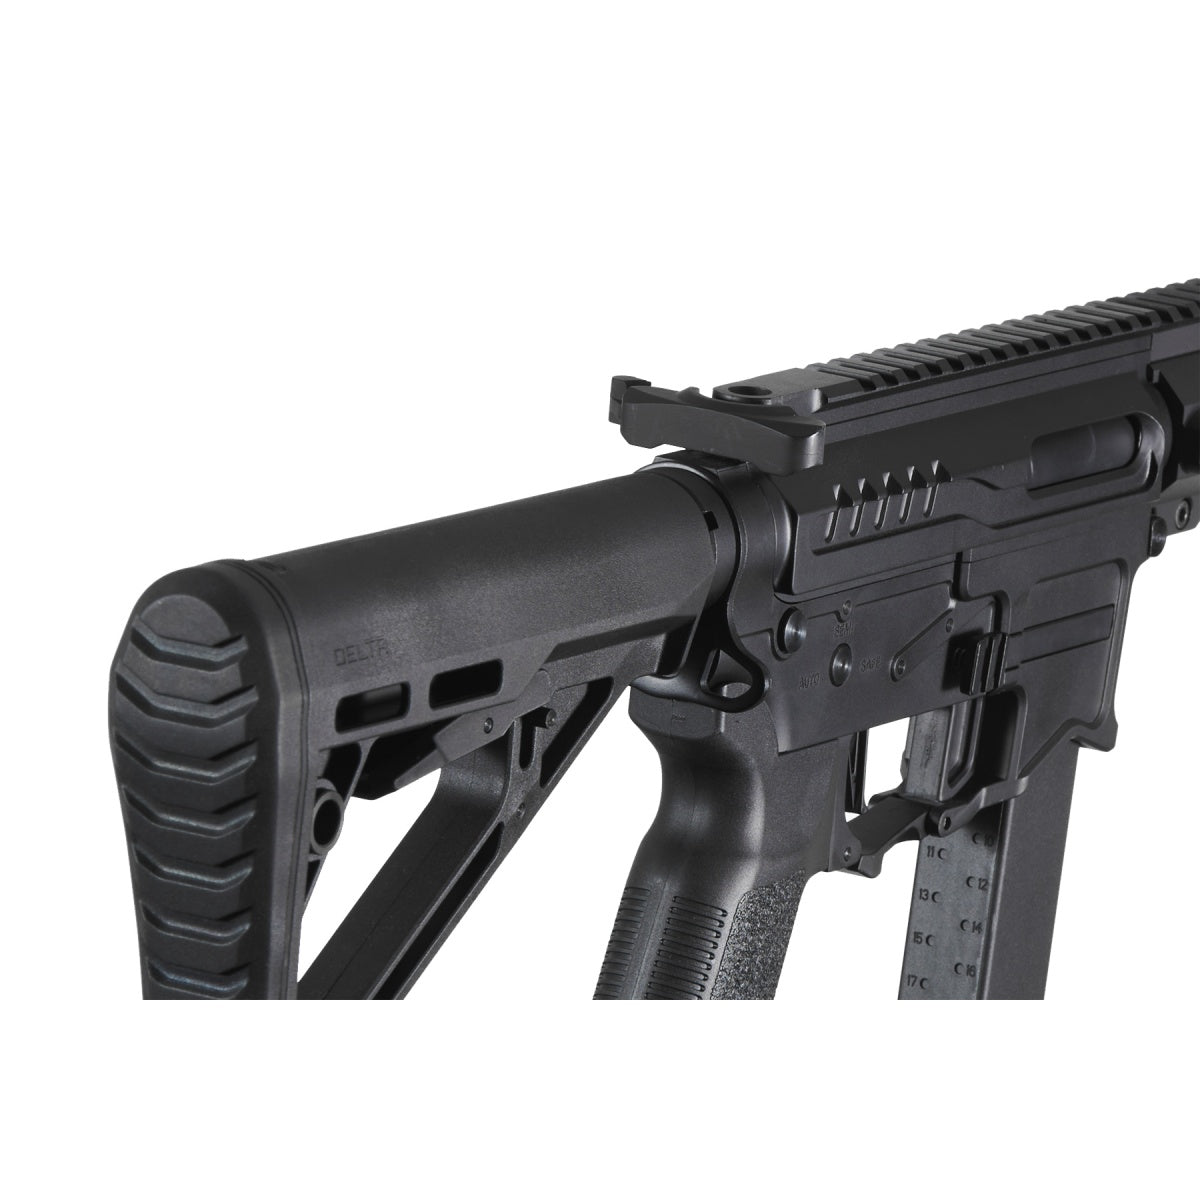 Zion Arms R&D Precision PW9 9mm Airsoft AEG Pistol Caliber